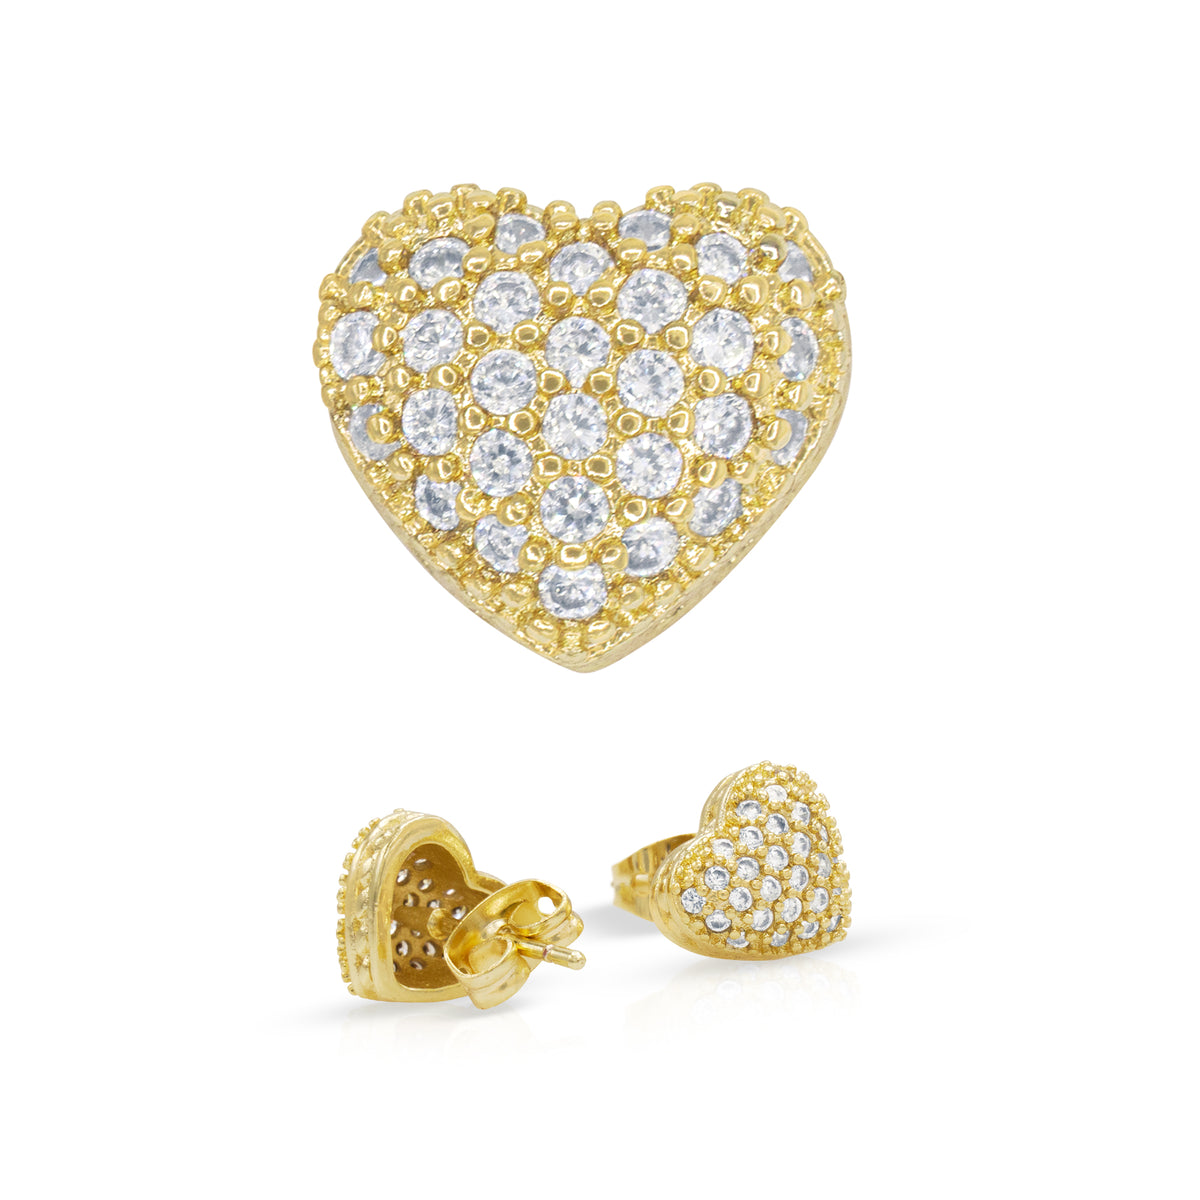 Triangle 14K Gold Filled Silver Earrings Cubic Zirconia Hip Hop Studs – JB  Jewelry BLVD